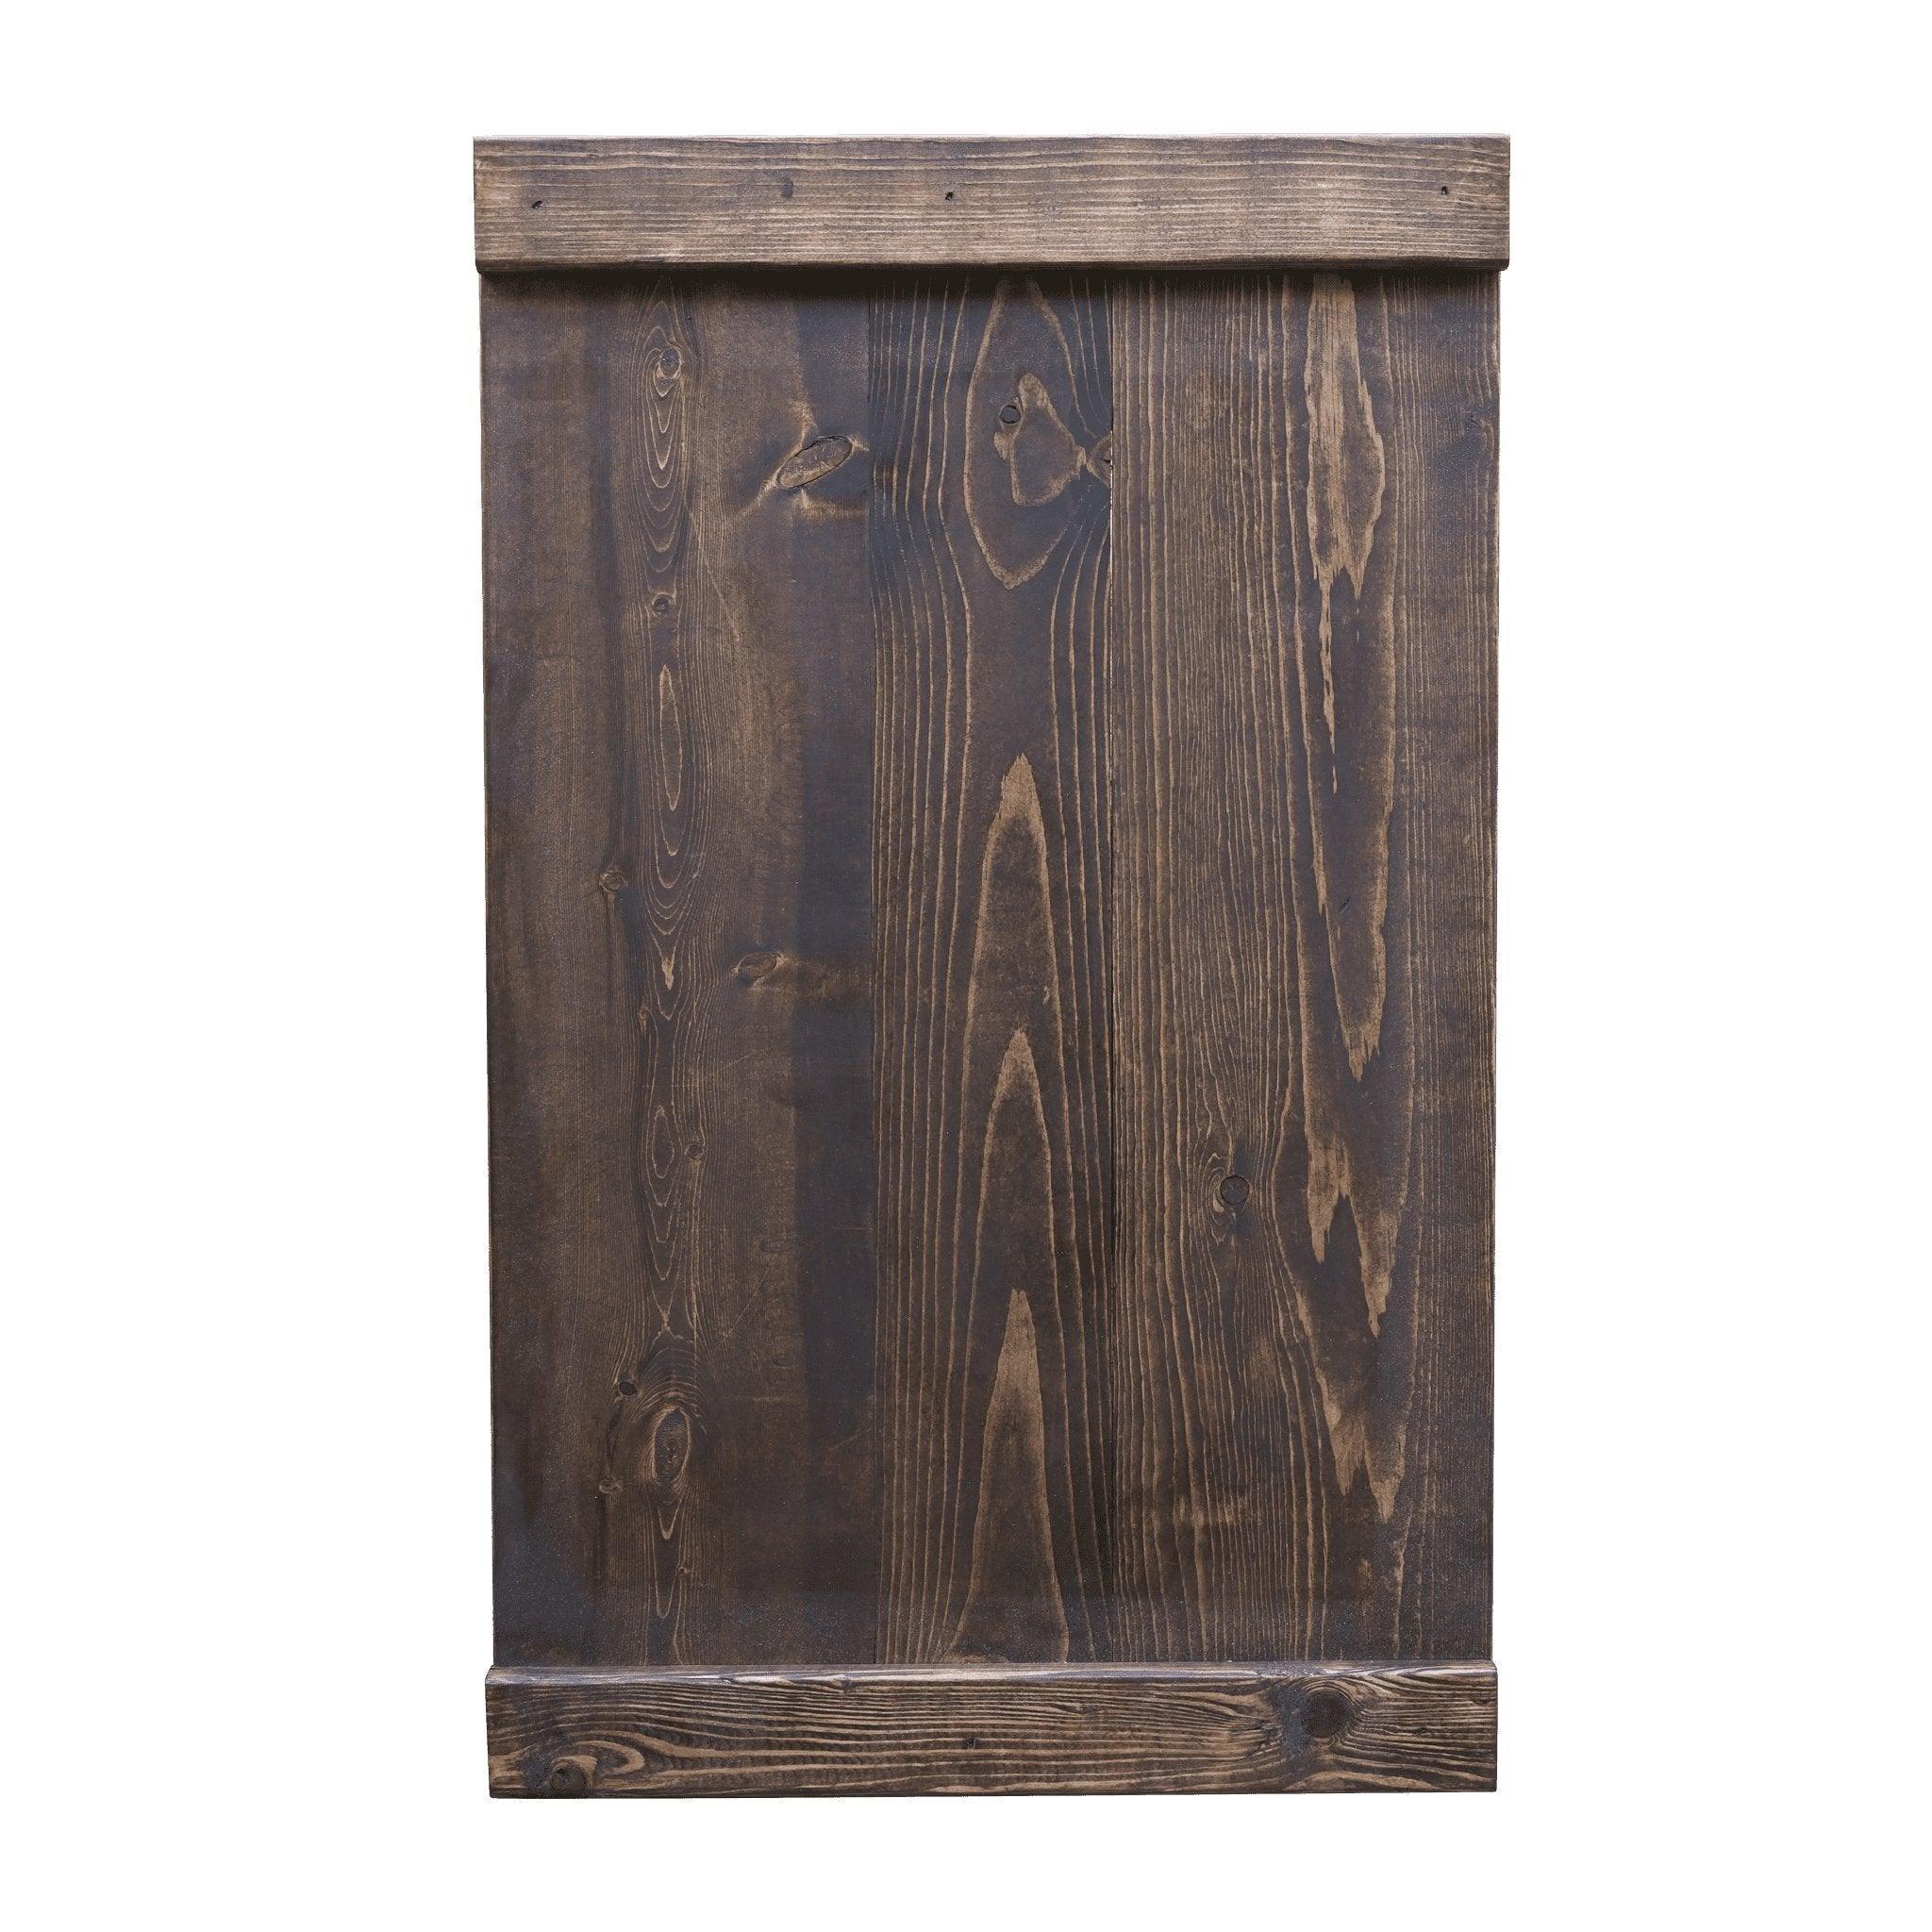 Flat Wood Panels - Matuska Taxidermy Supply Company